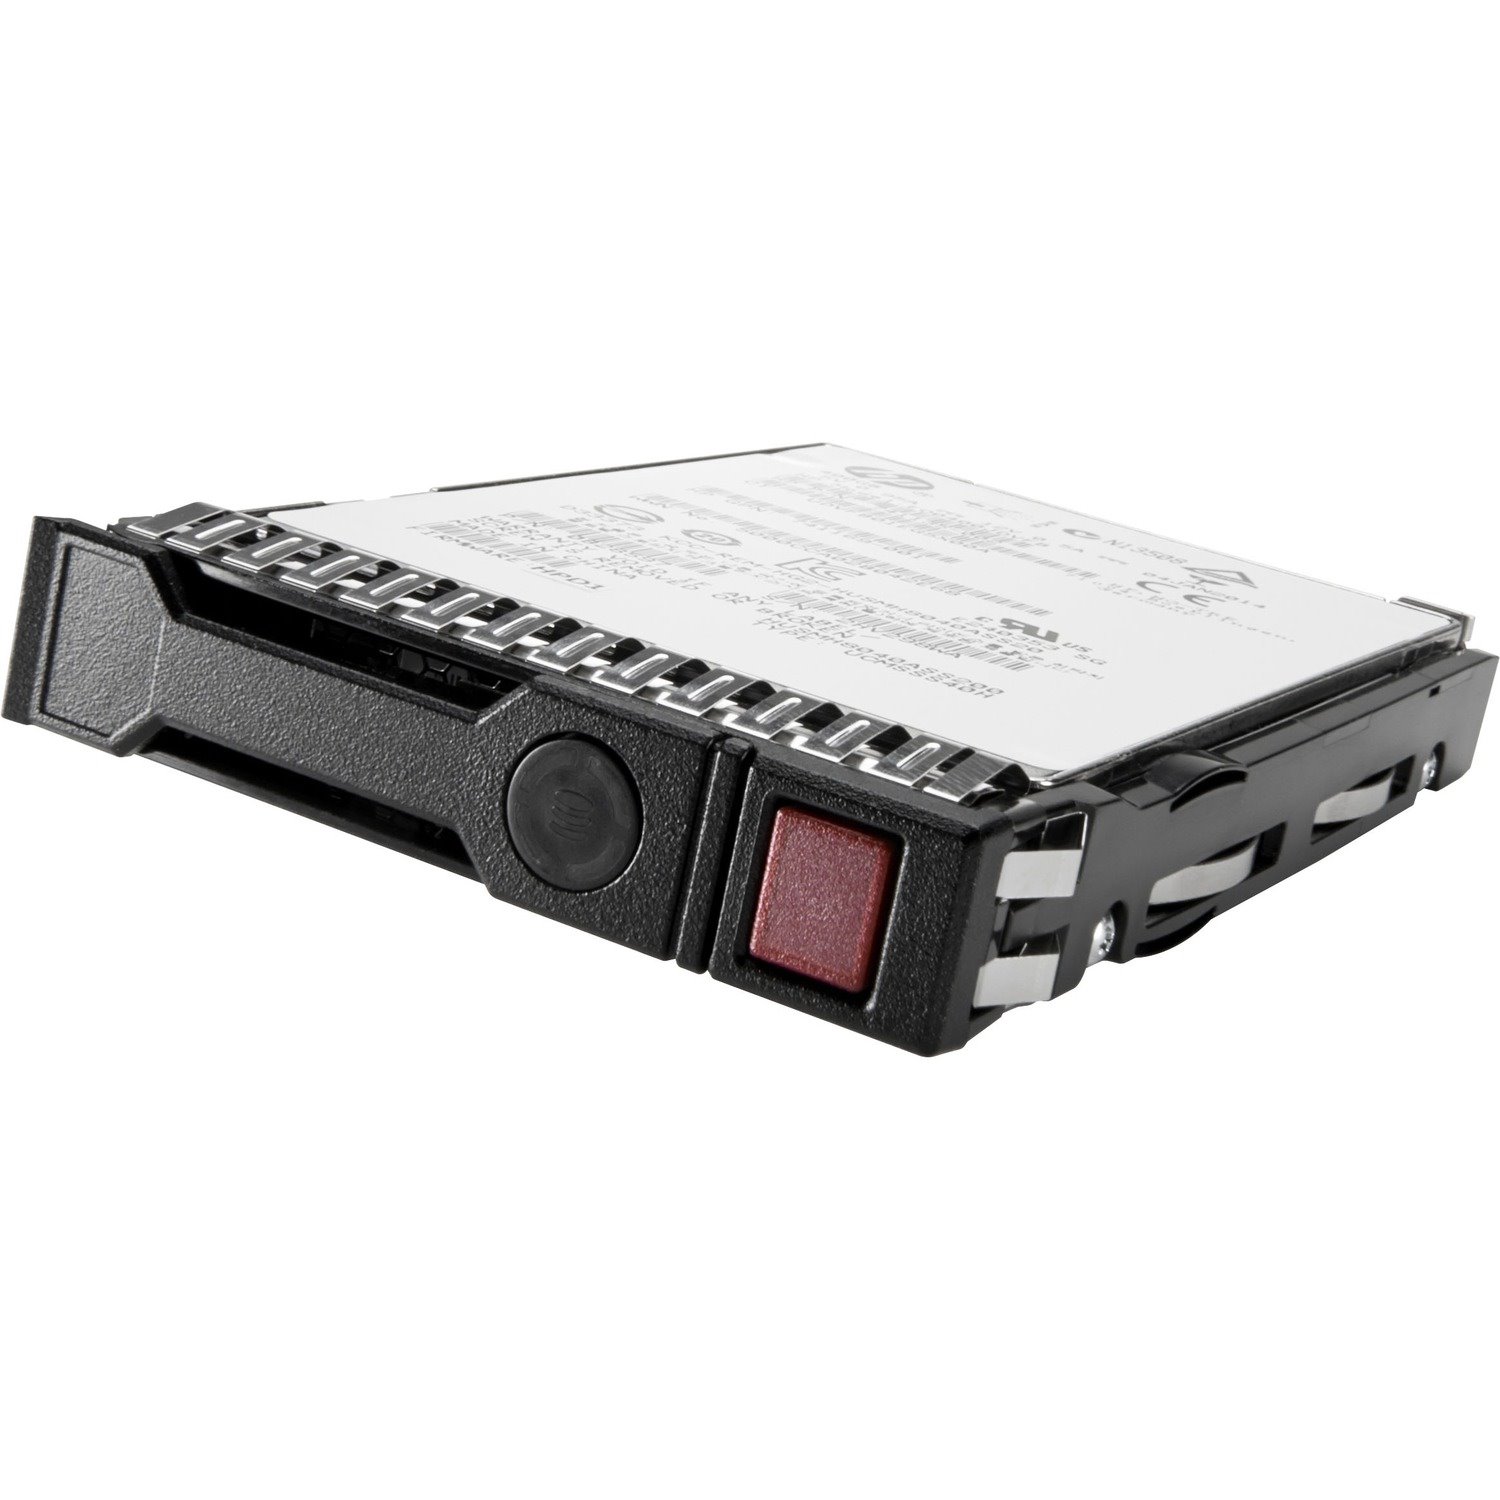 HPE 300 GB Hard Drive - 2.5" Internal - SAS